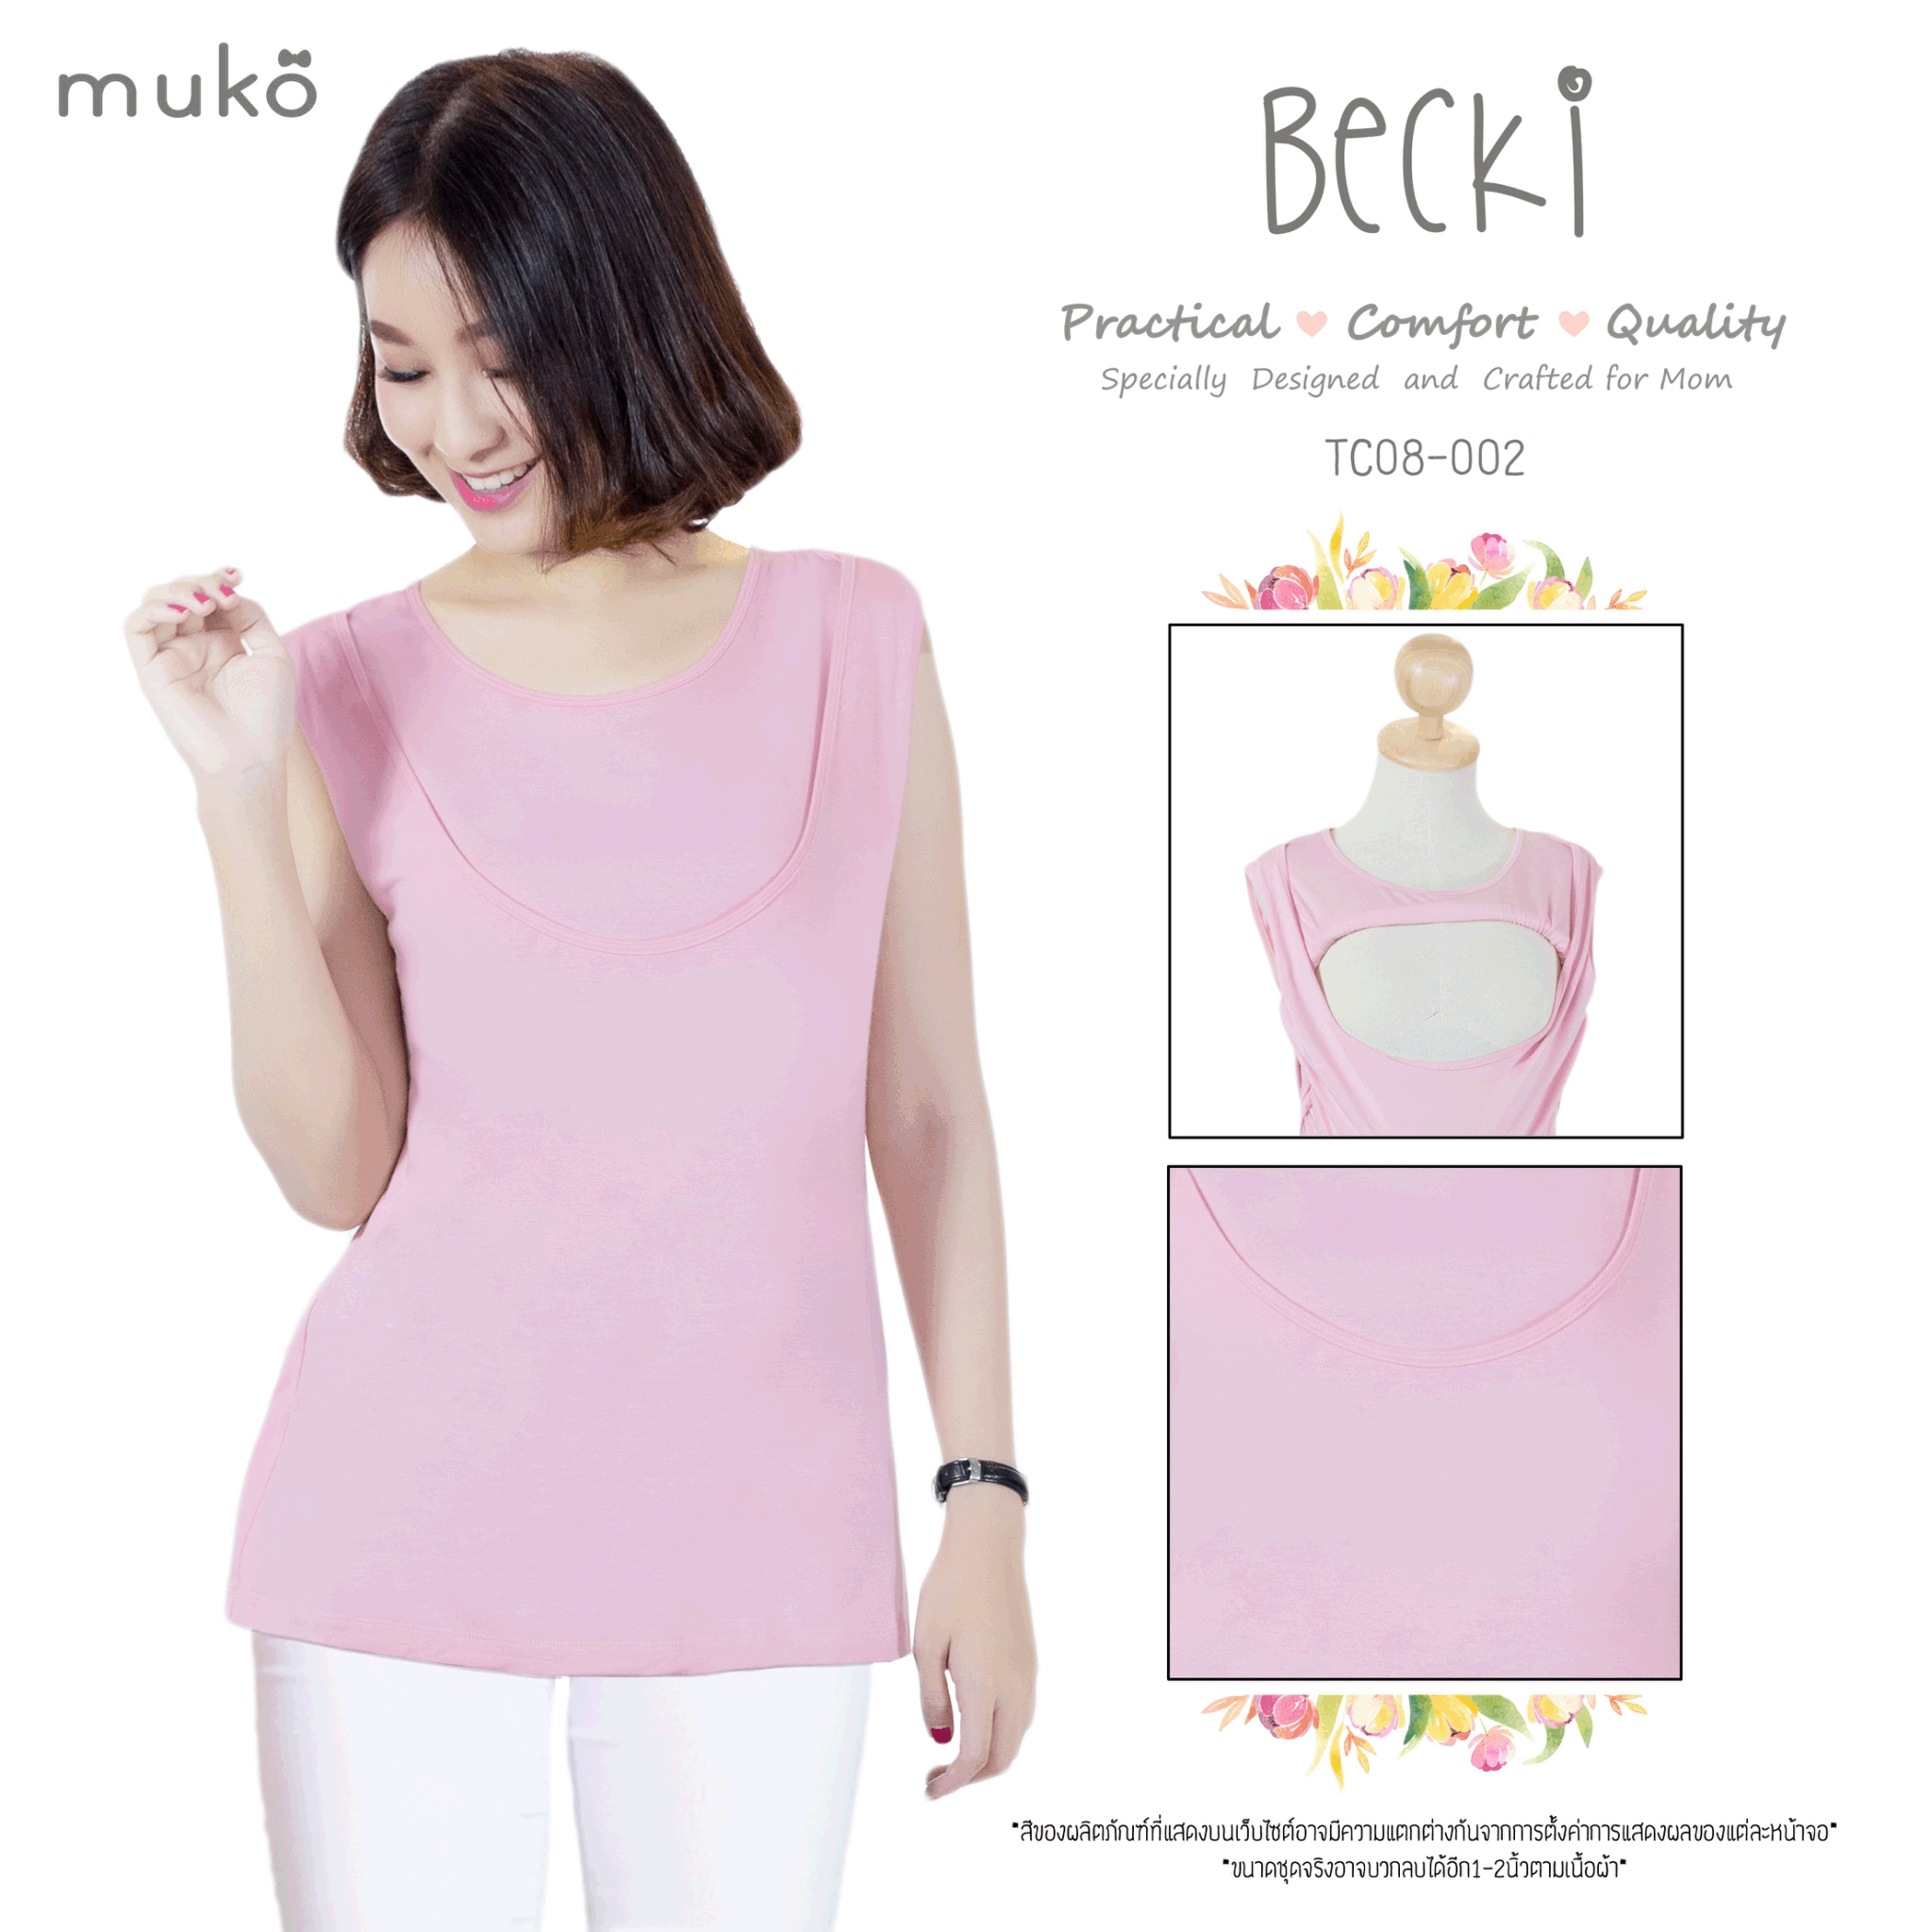 Muko Becki เสื้อเปิดให้นม ชุดคลุมท้อง TC08-002M สีชมพู